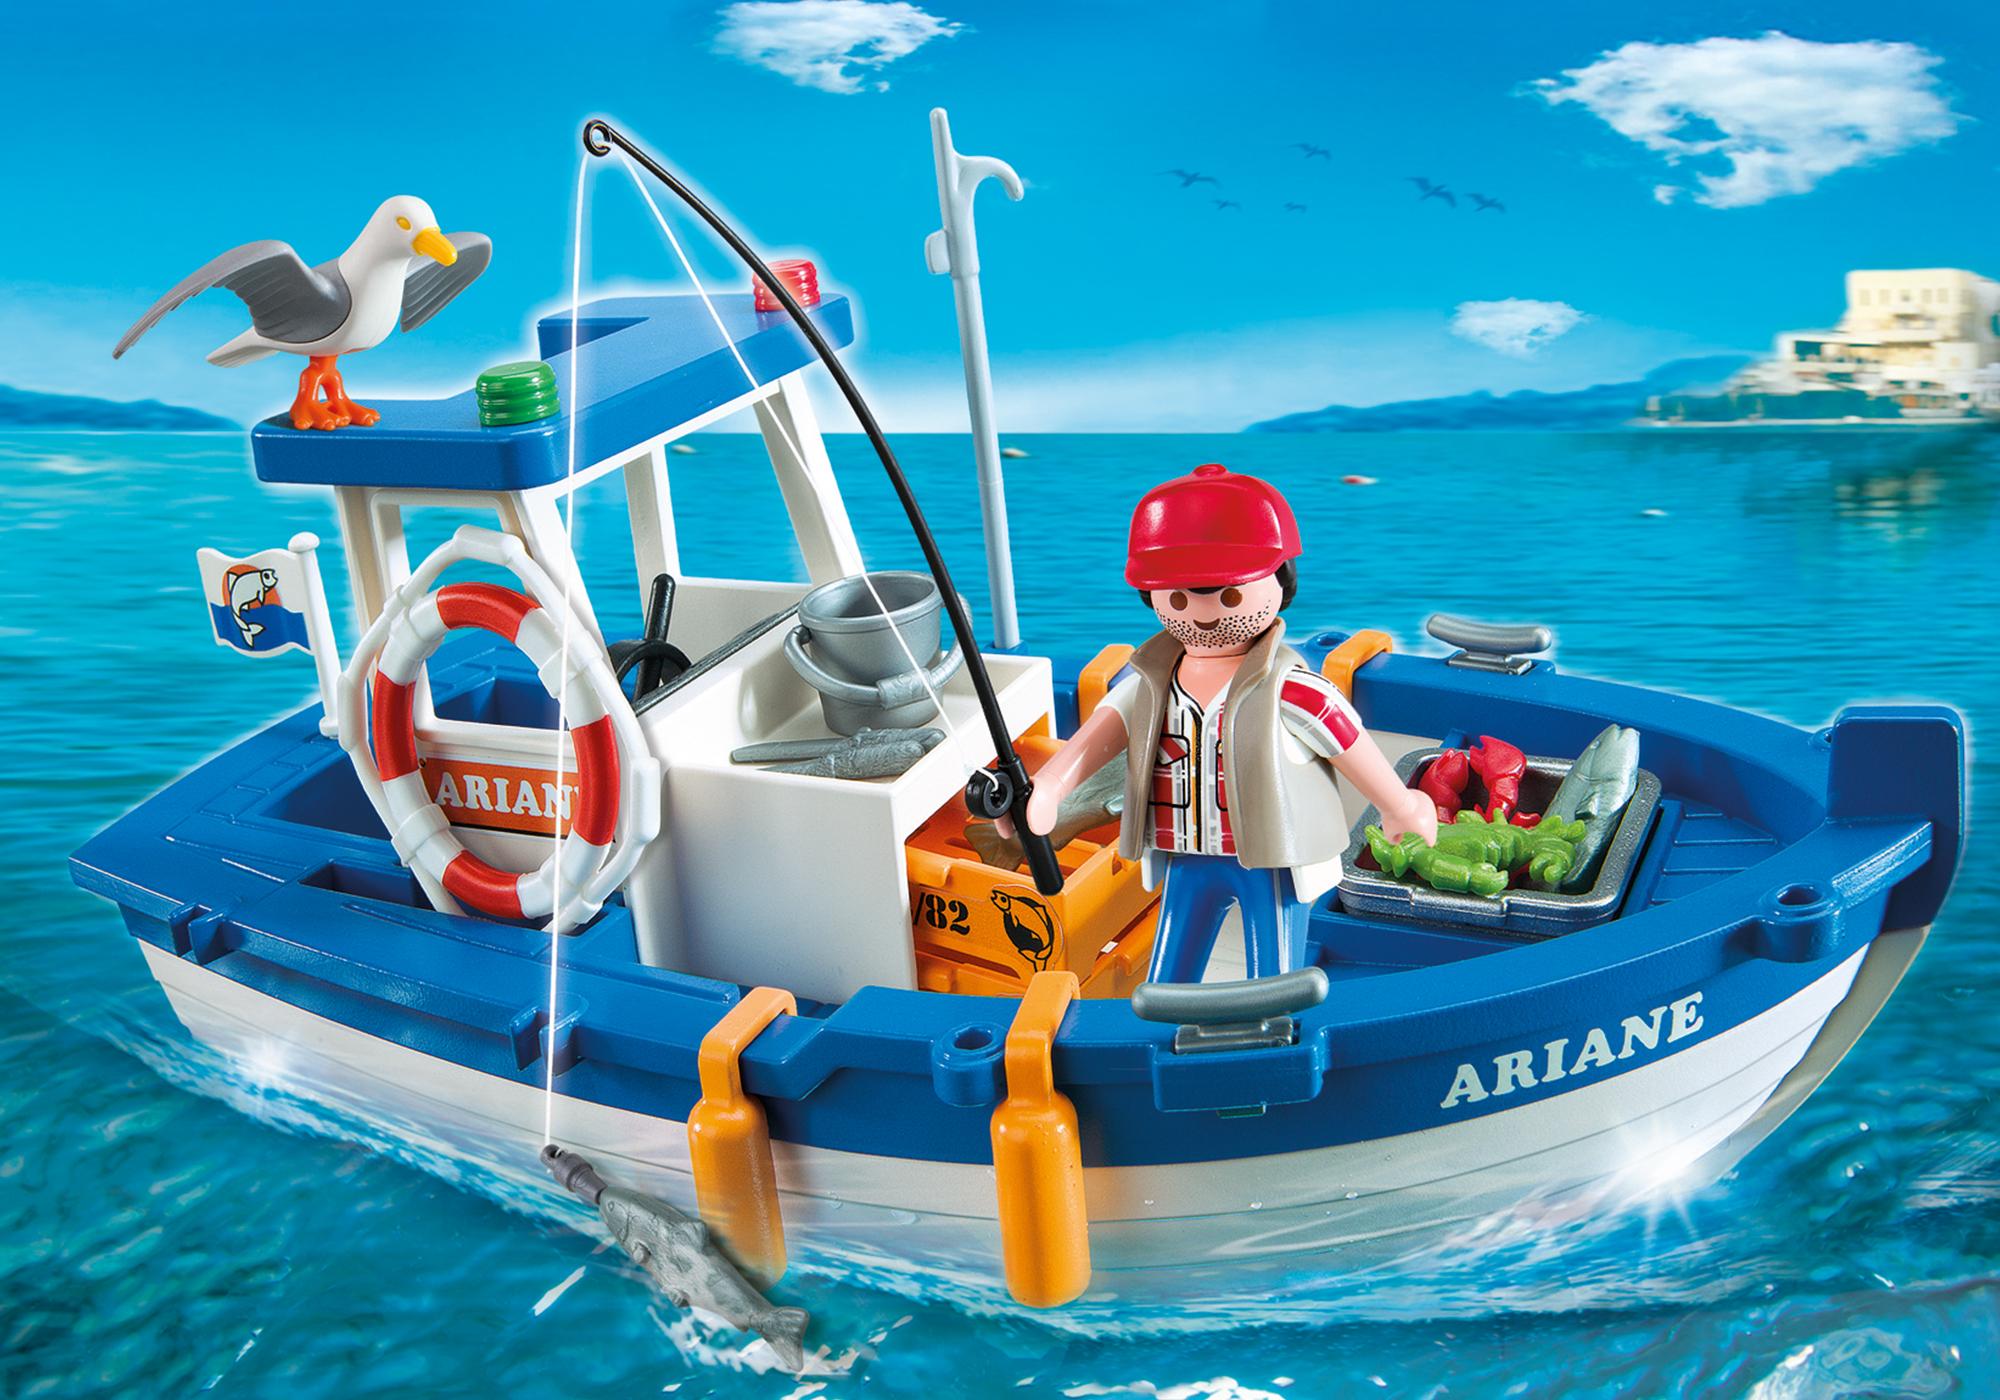 playmobil ariane rescue boat